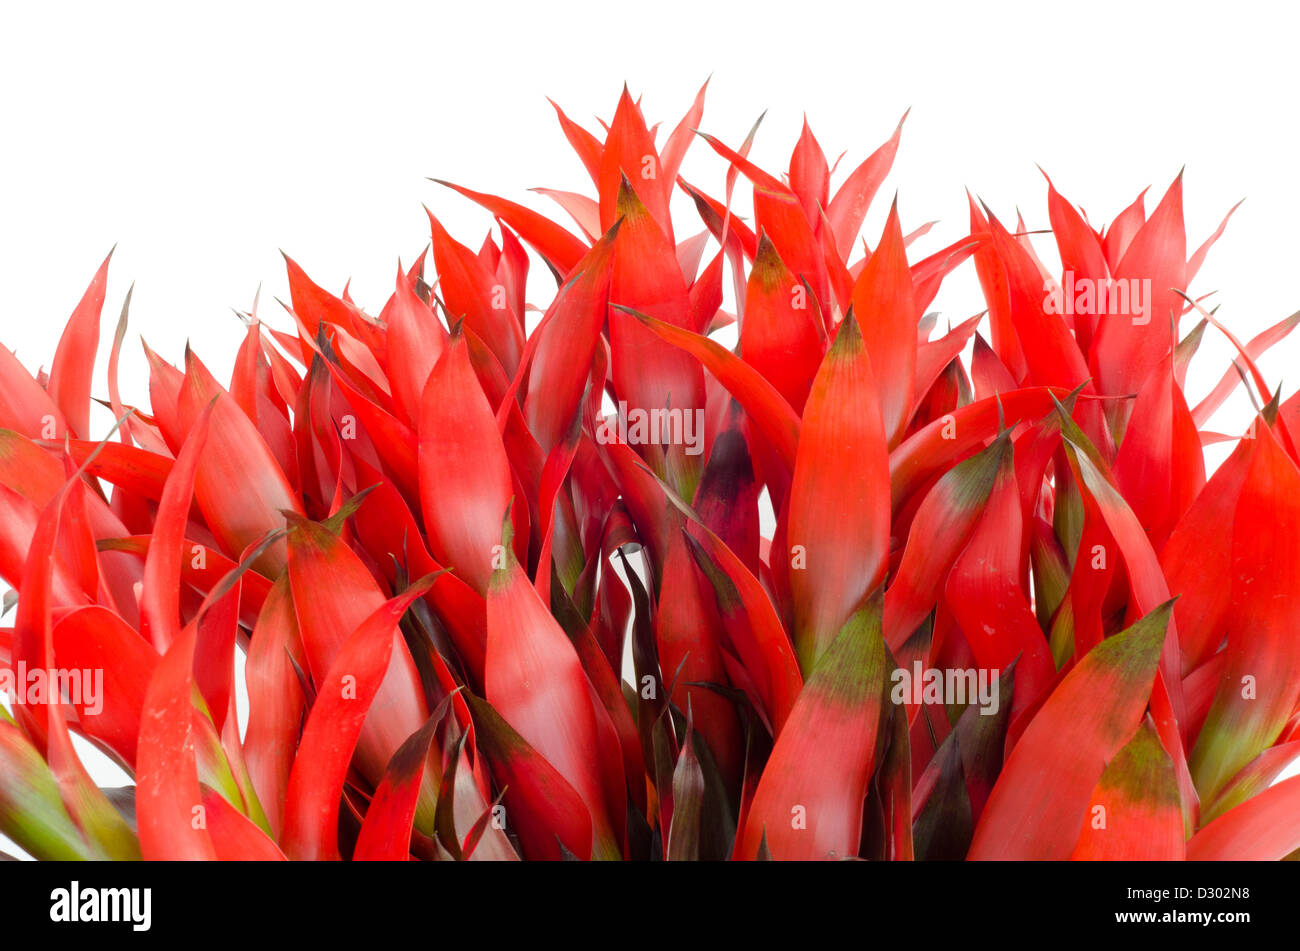 Bromeliad isolated on white background Stock Photo